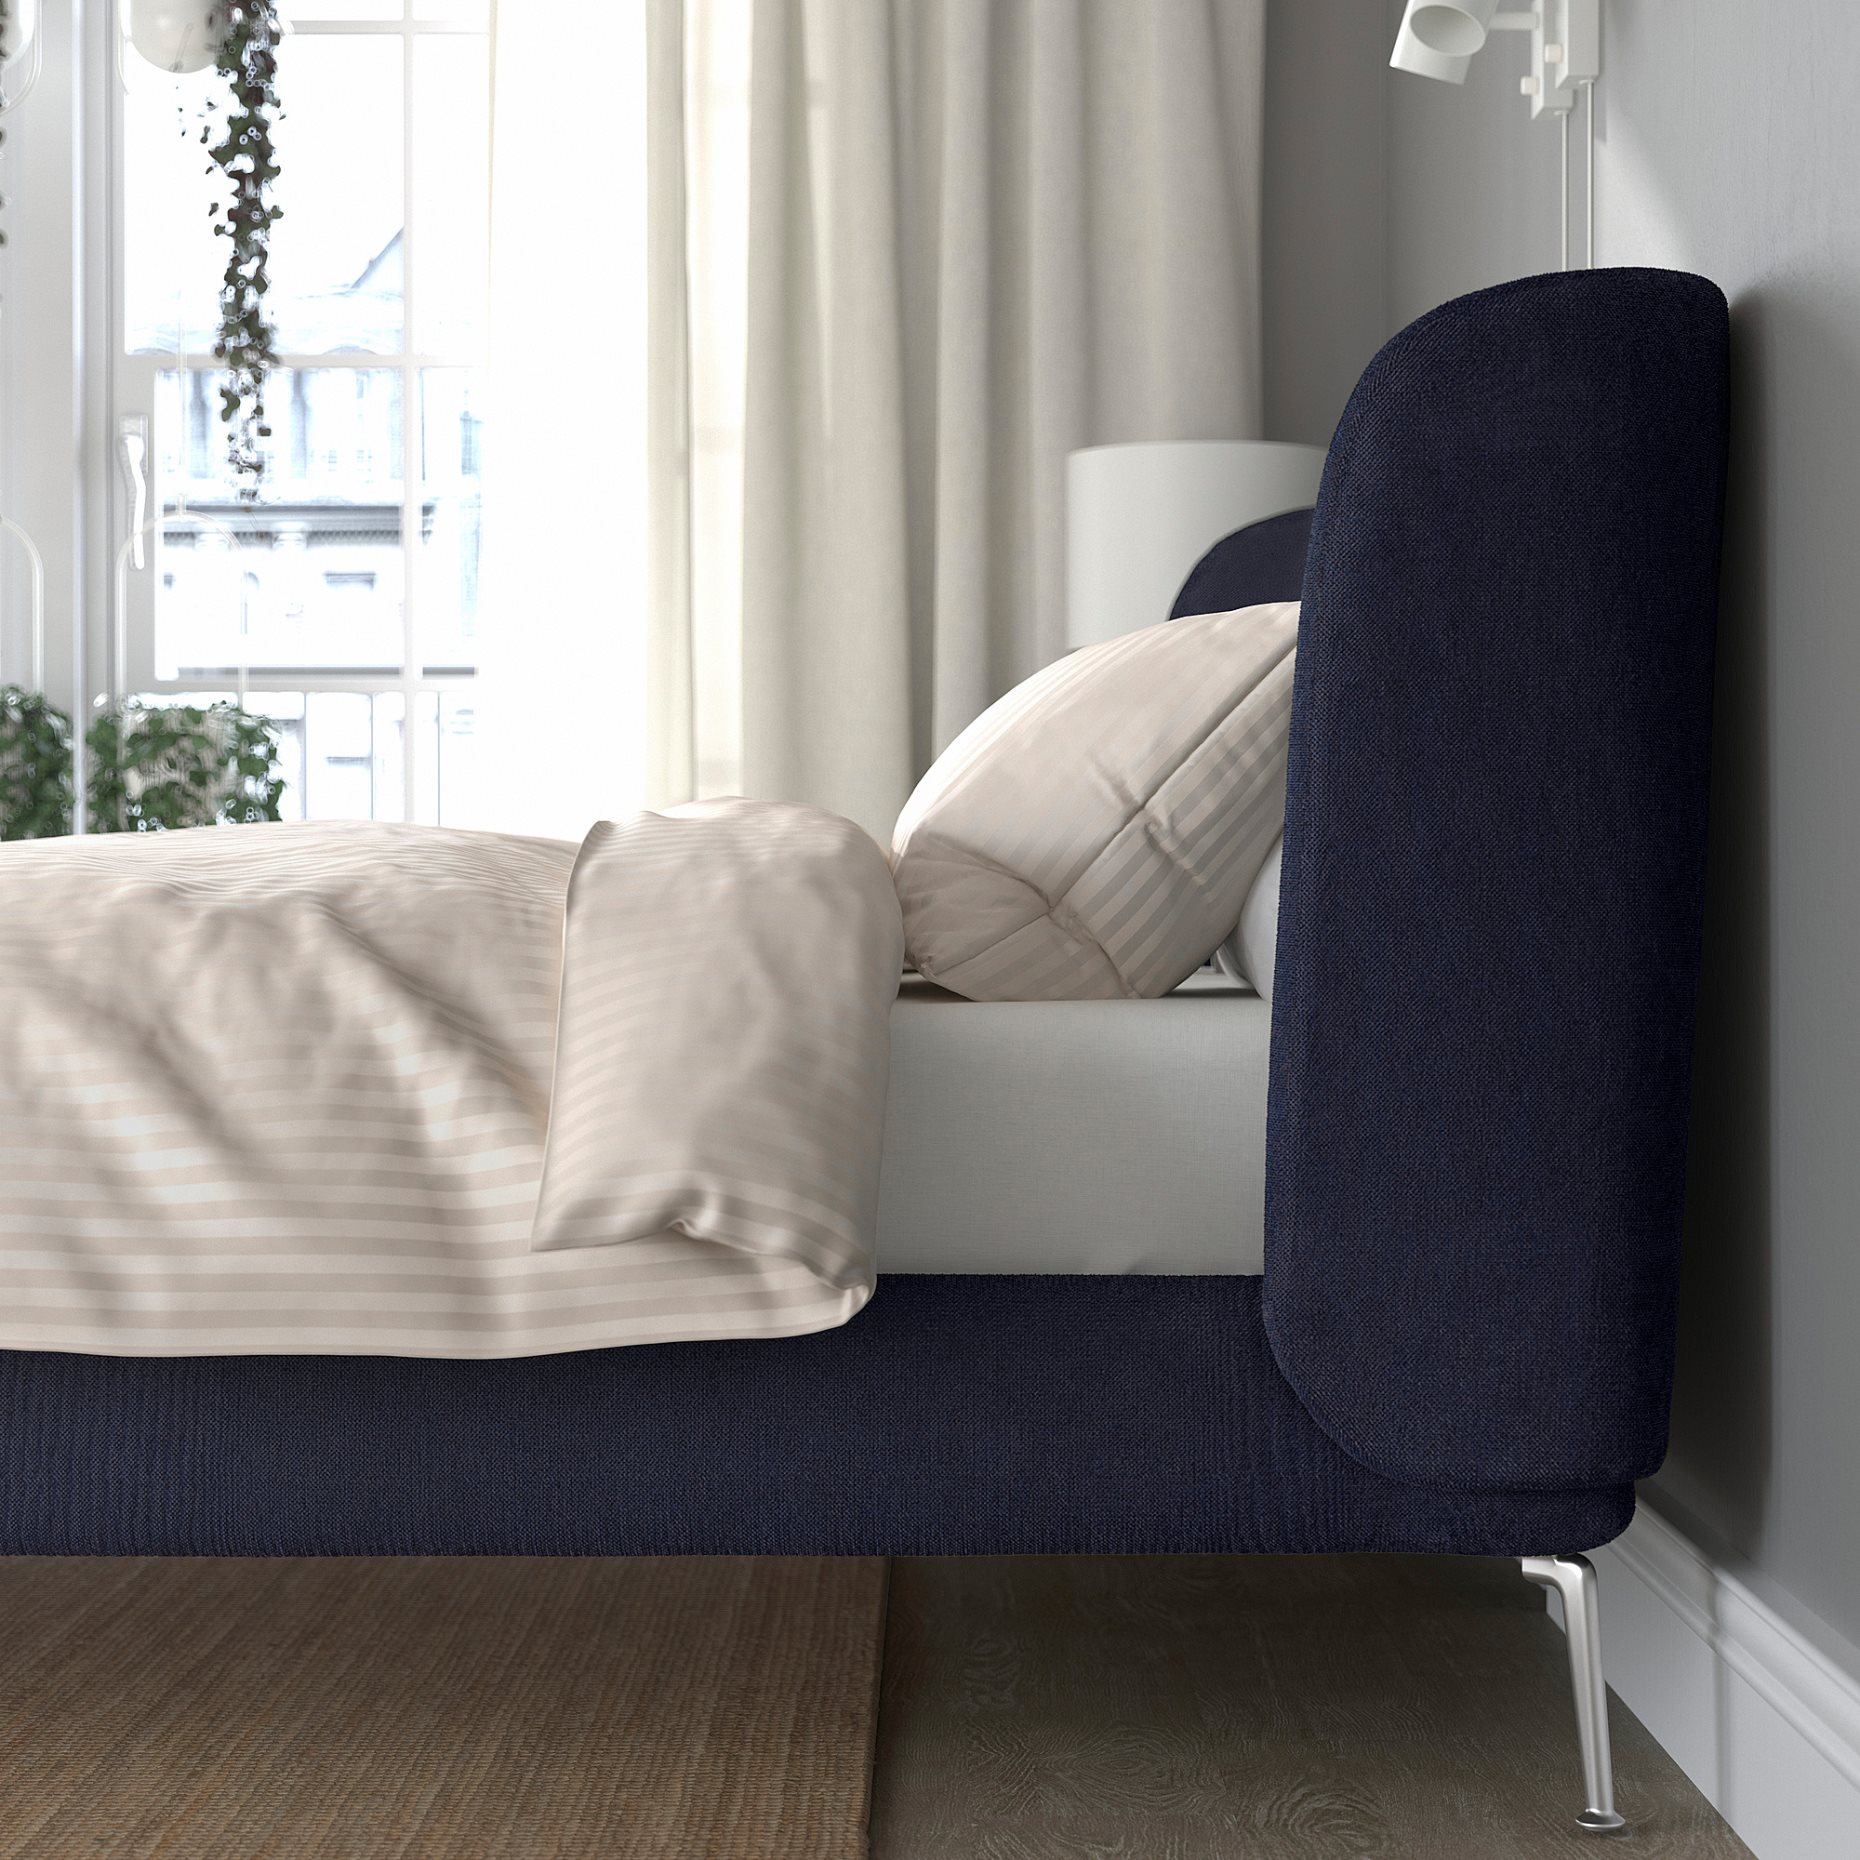 TUFJORD, κρεβάτι με επένδυση, 160x200 cm, 495.553.38